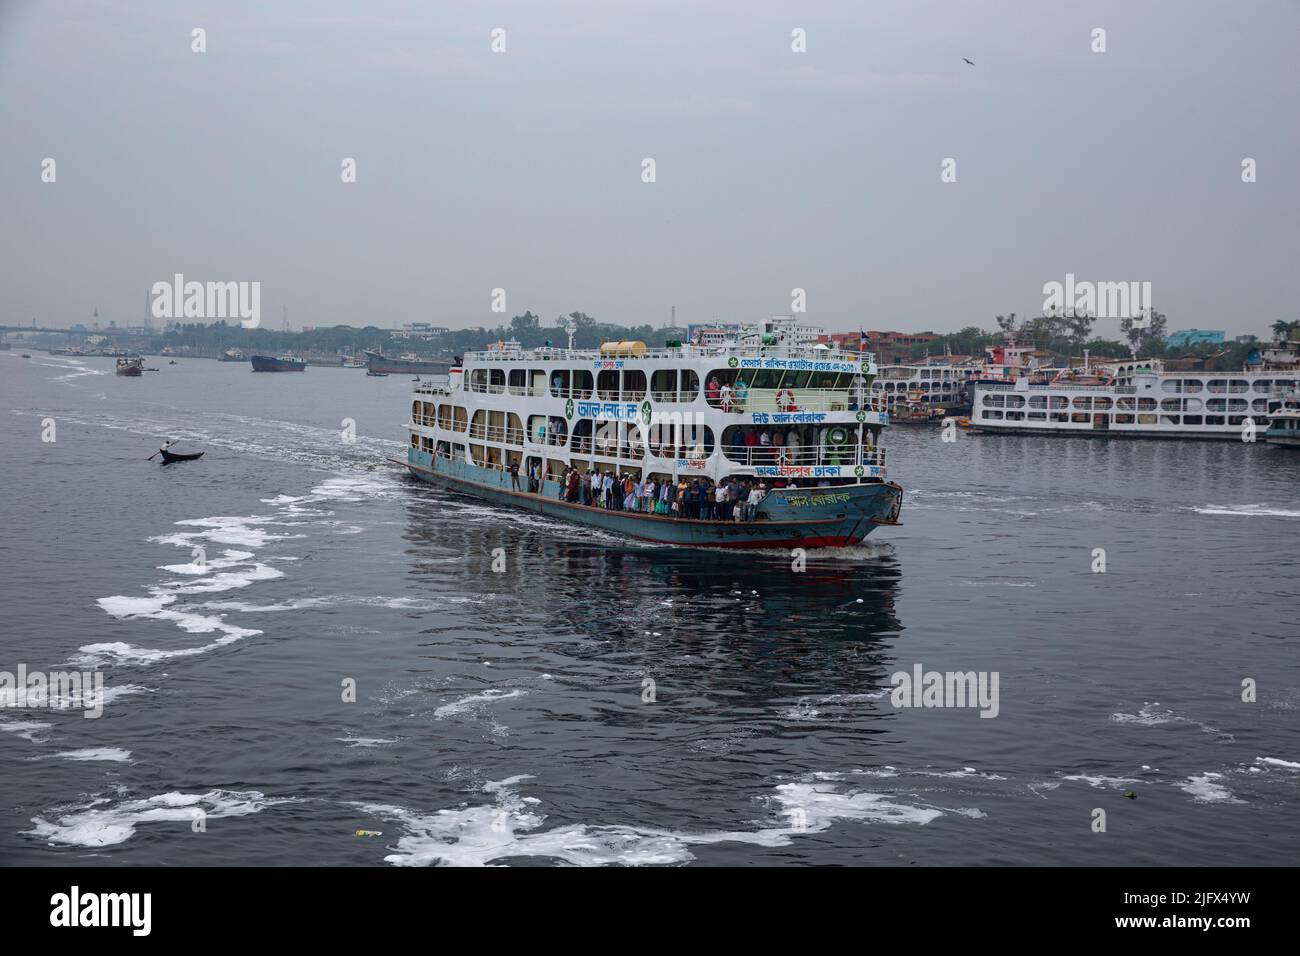 Passenger vessel on the buriganga river, Dhaka, Bangladesh. Stock Photo